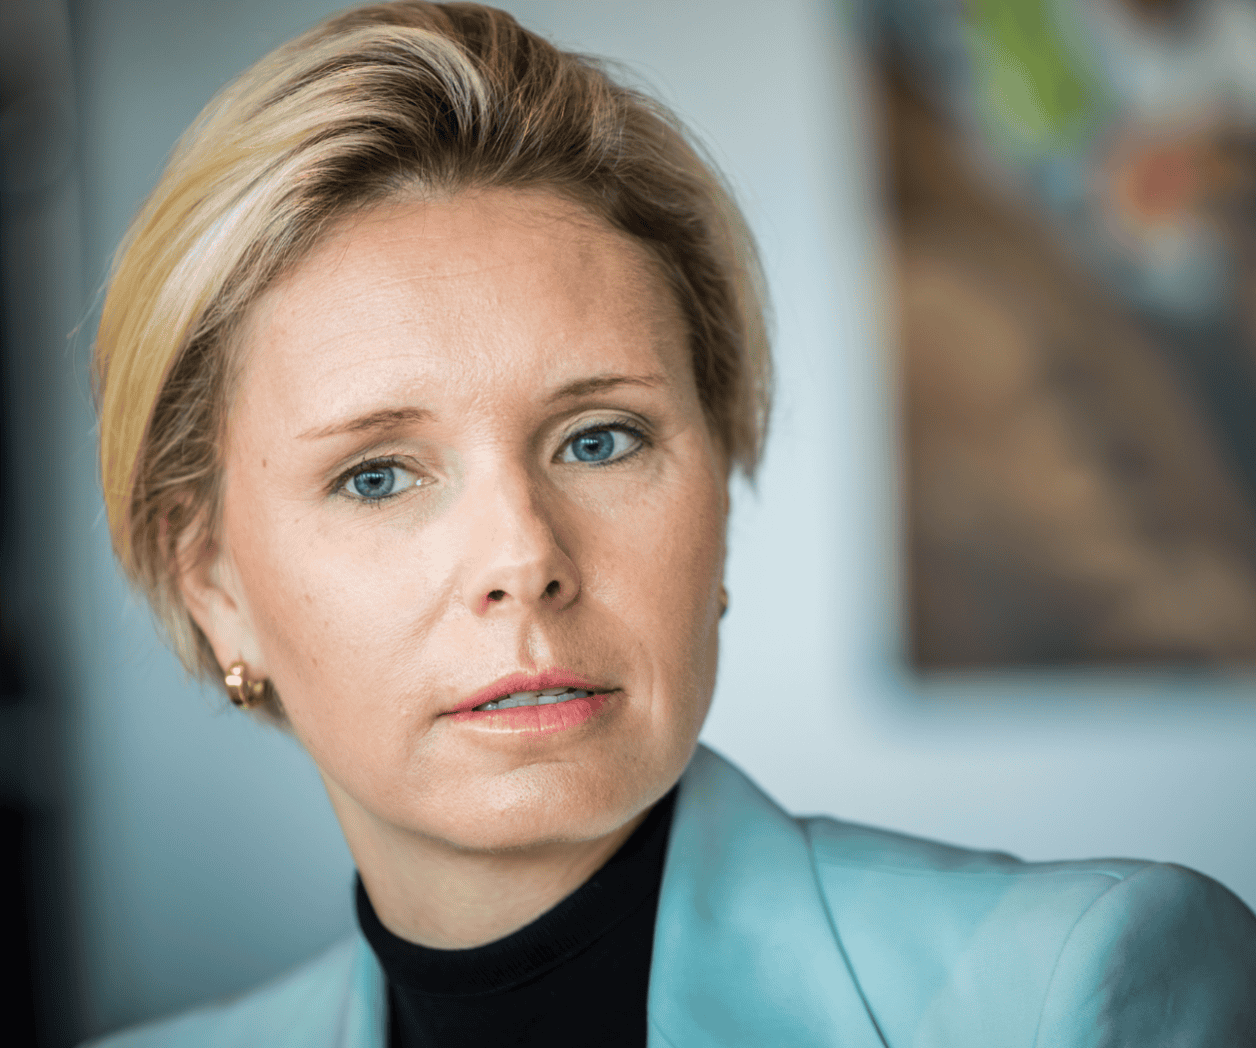 Eligen a Ladina Heimgartner como nueva Presidenta de WAN-IFRA